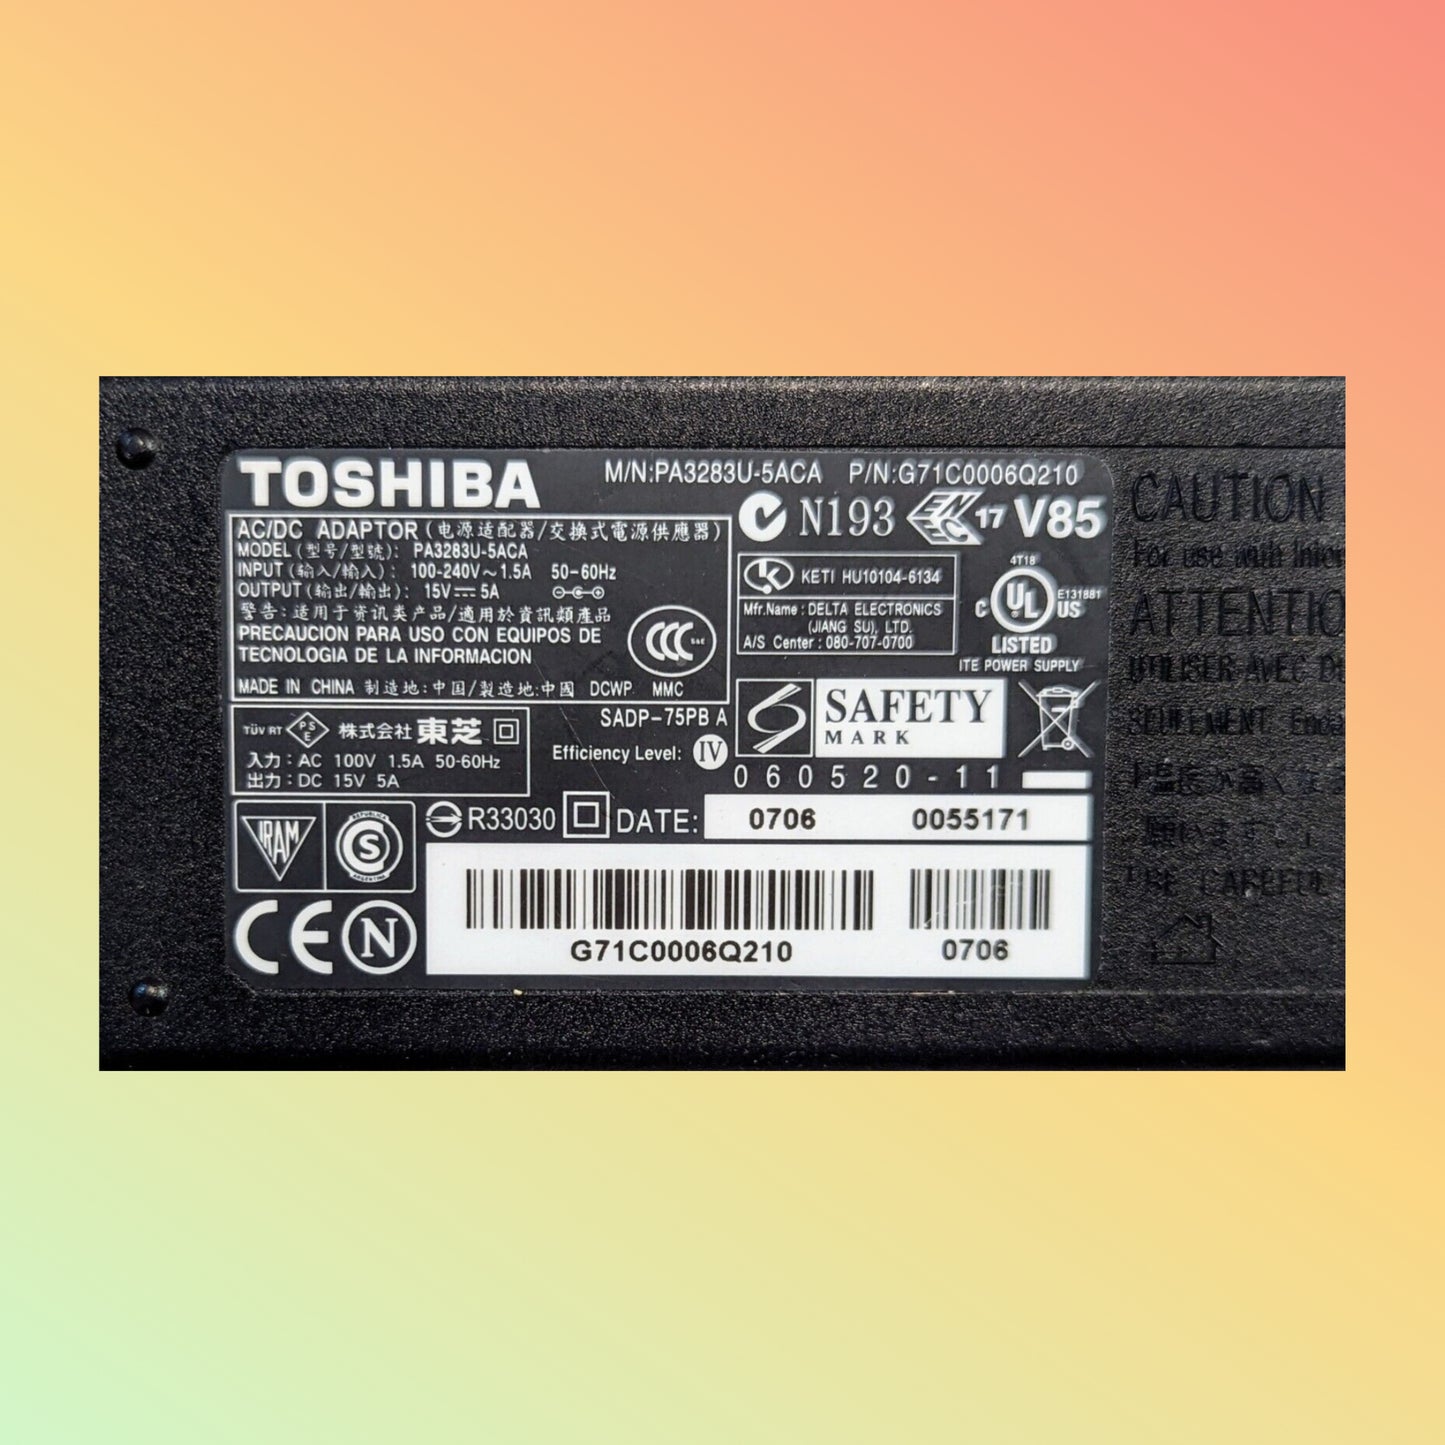 Power Adapter For Toshiba TCx800 POS Machine